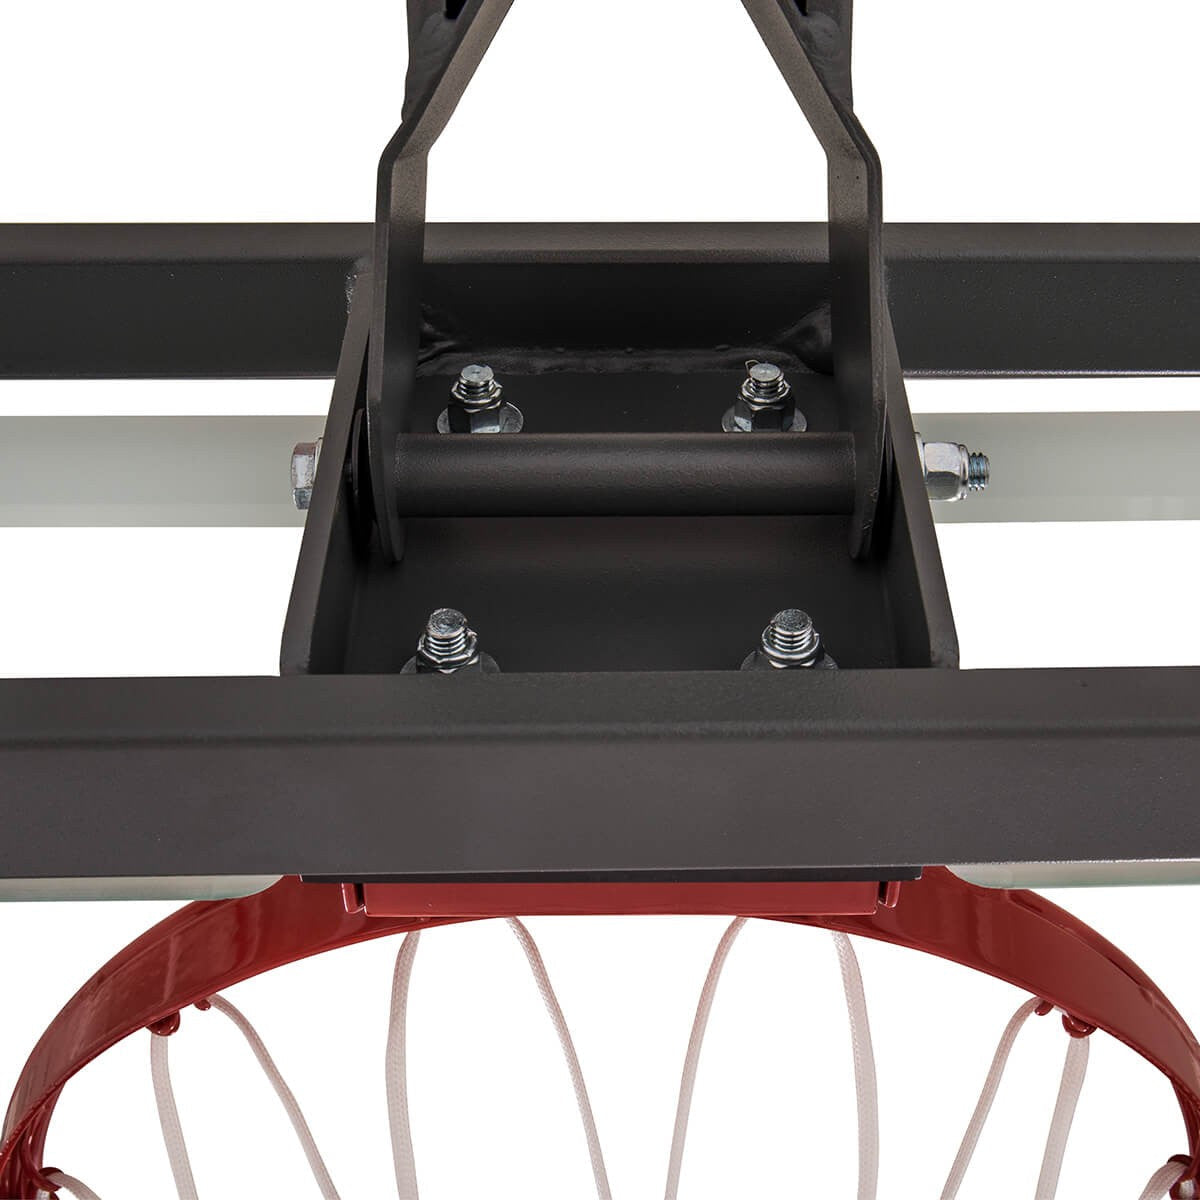 Goaliath GB60 In-Ground Basketball Hoop System